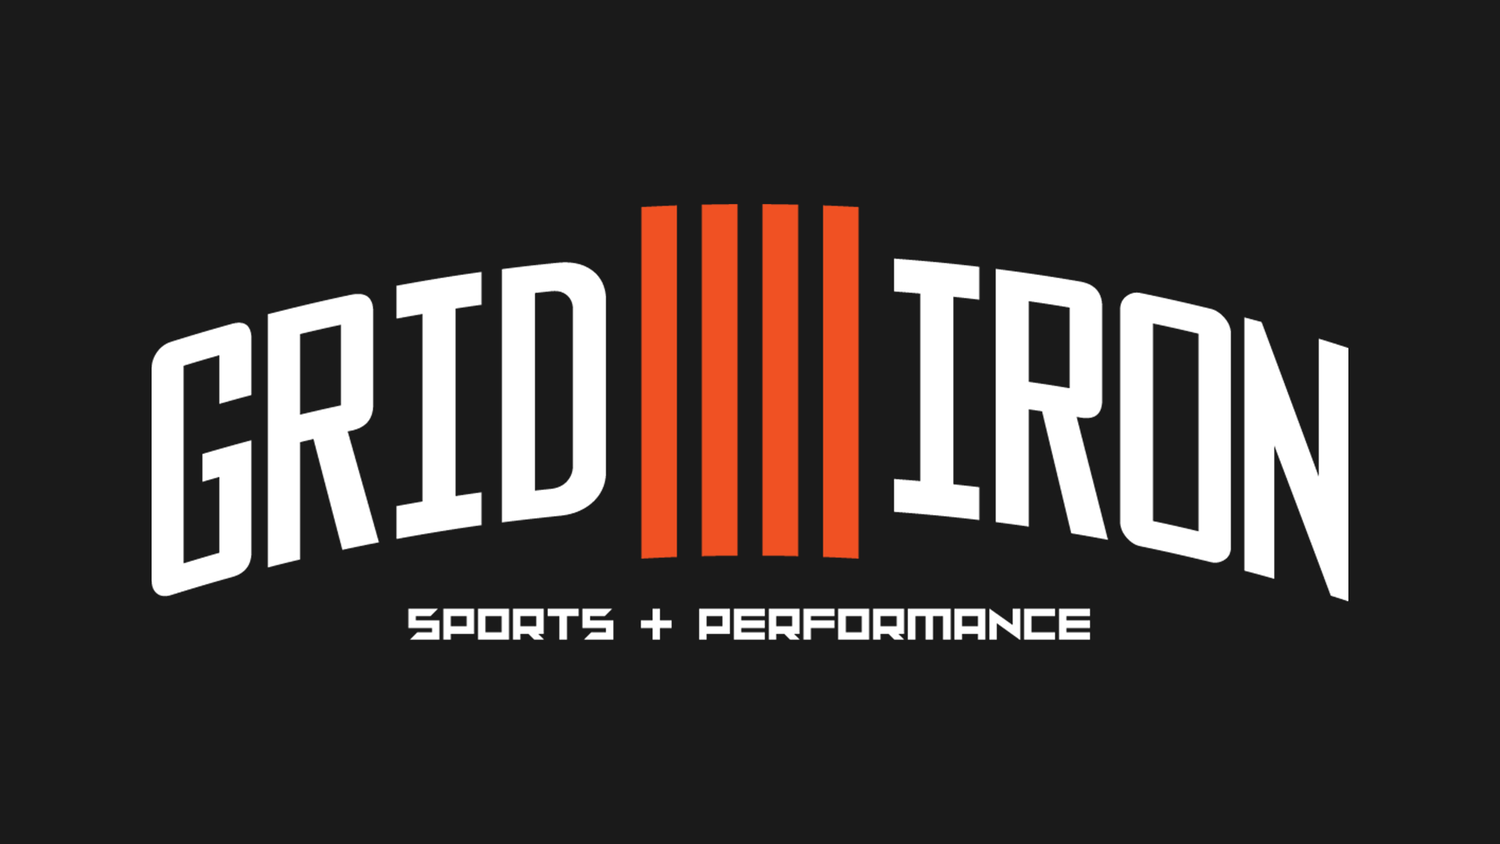 GridIron Sports + Performance